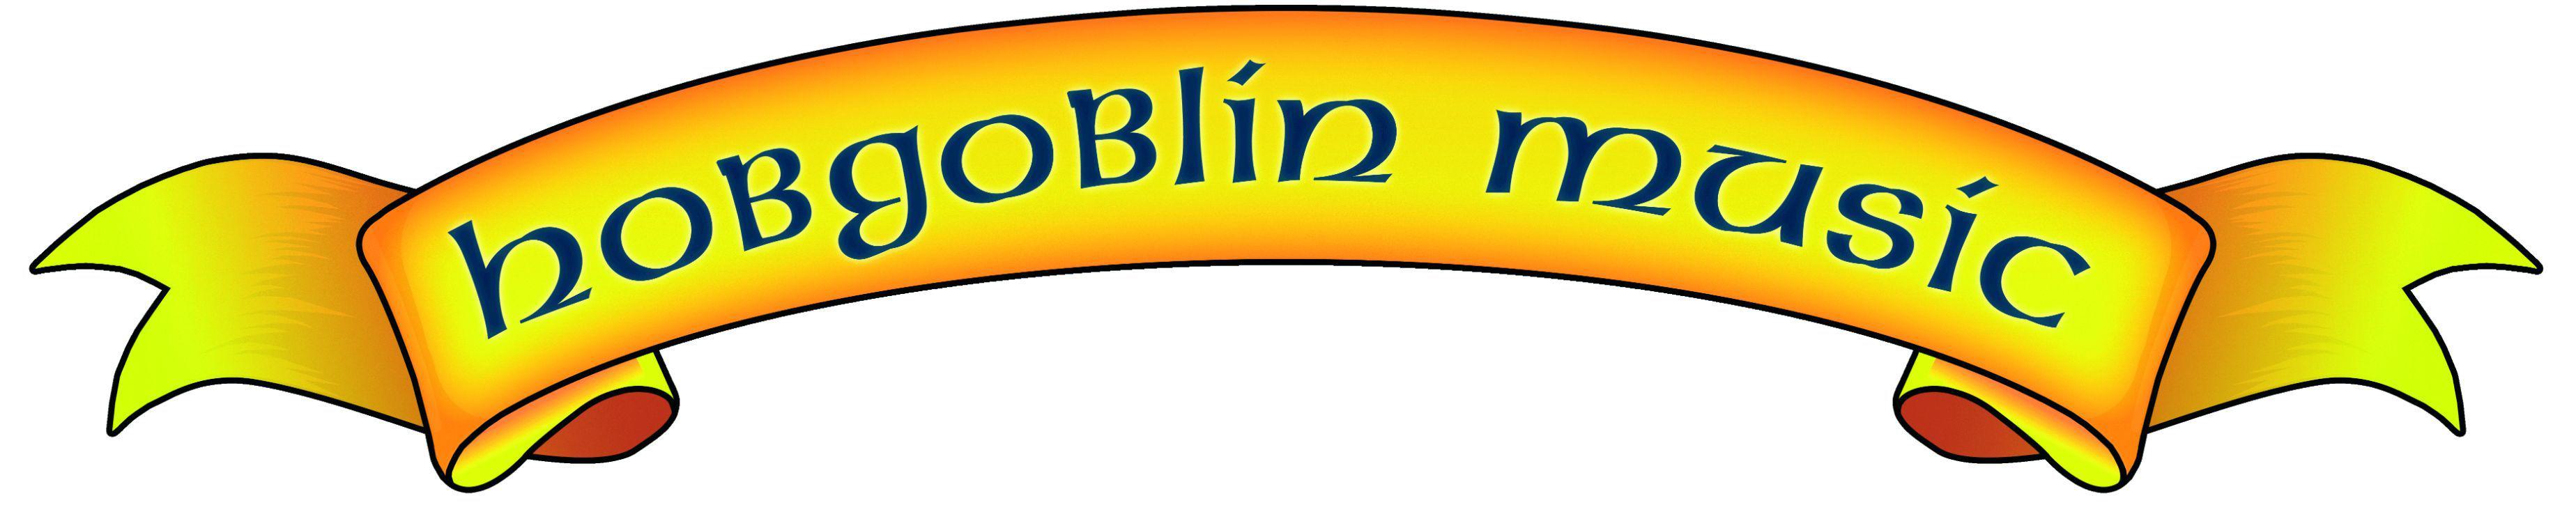 Hobgoblin Music logo1 1